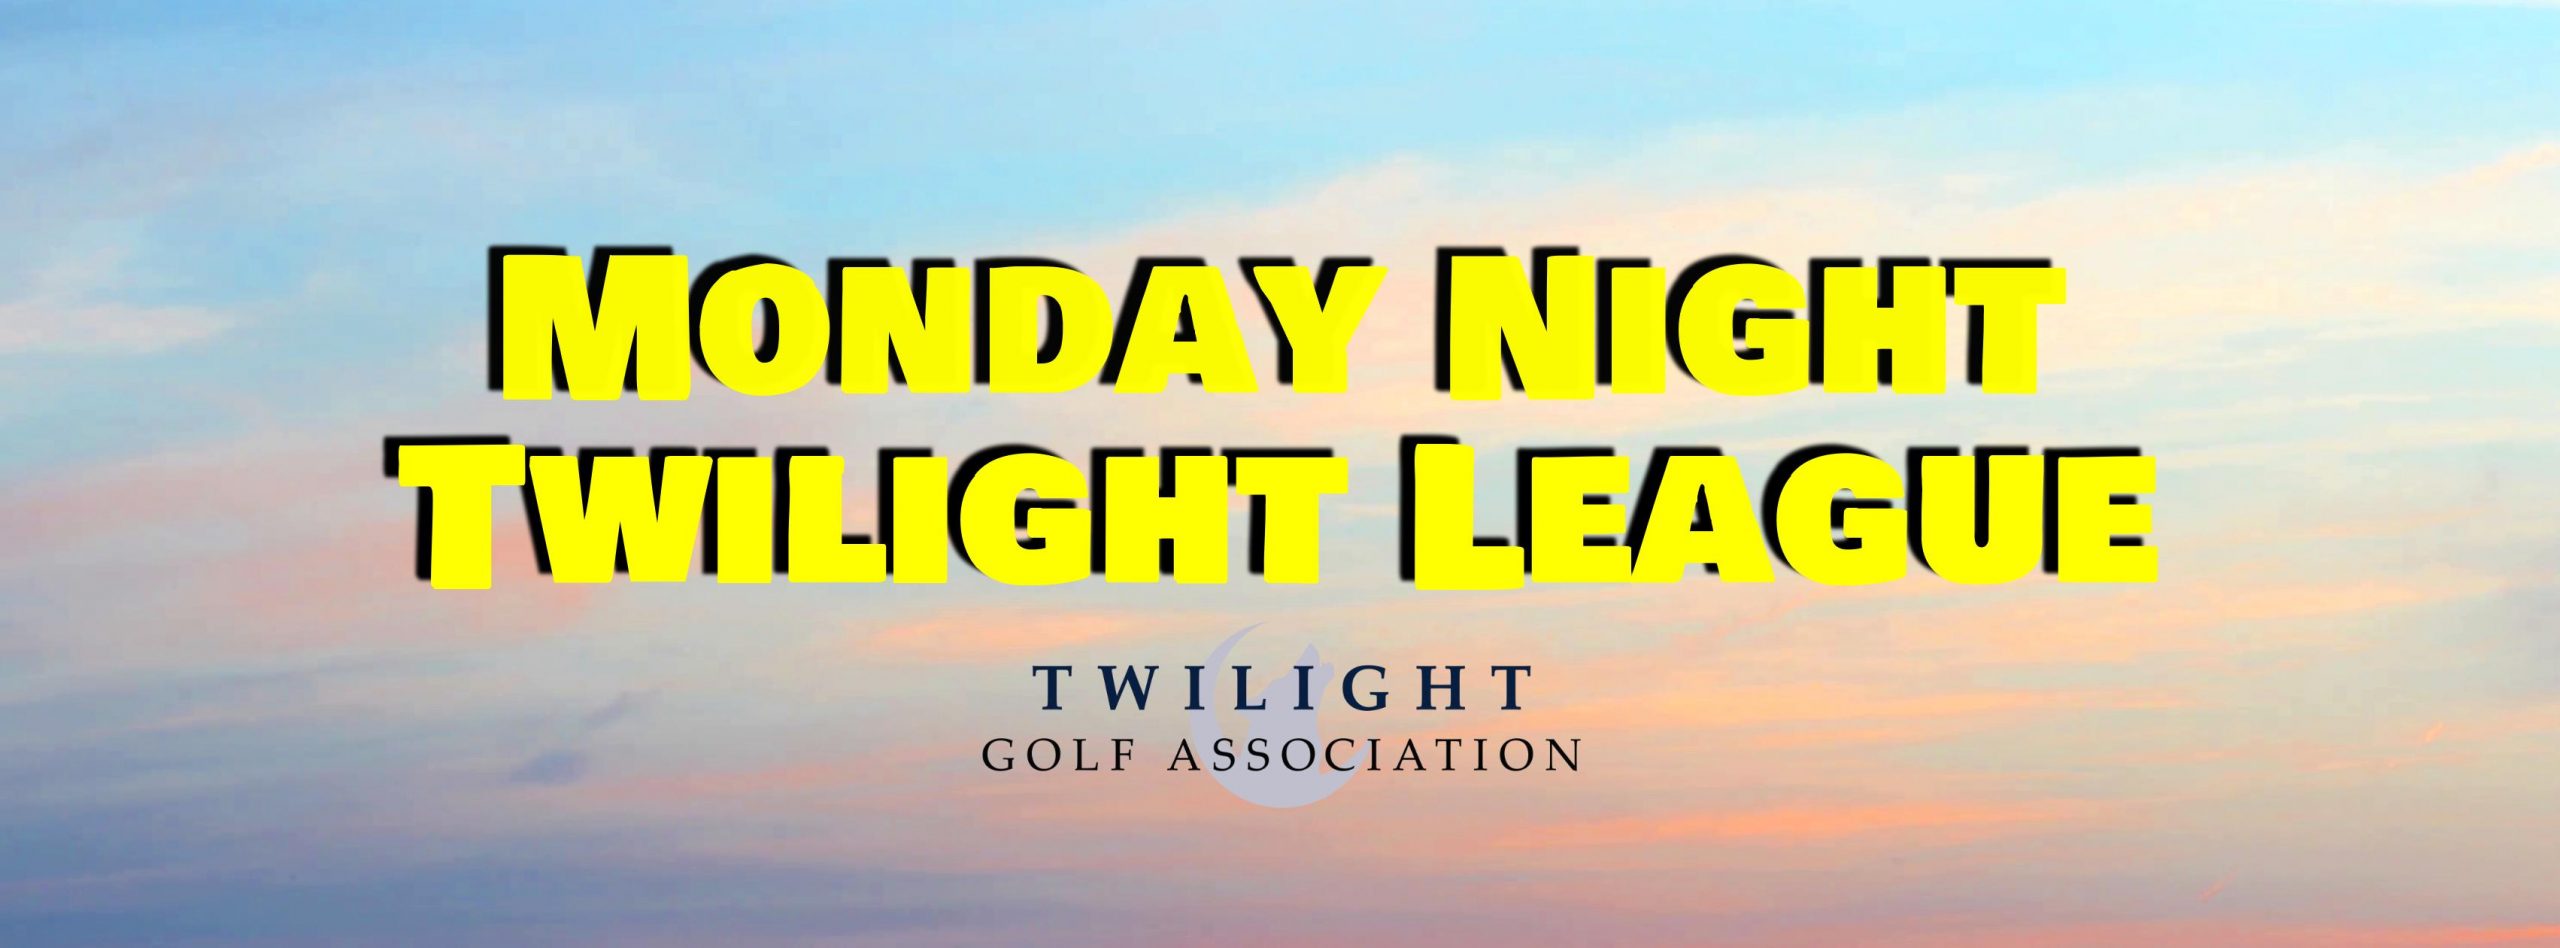 Monday Night Twilight League at Walnut Lane Golf Club